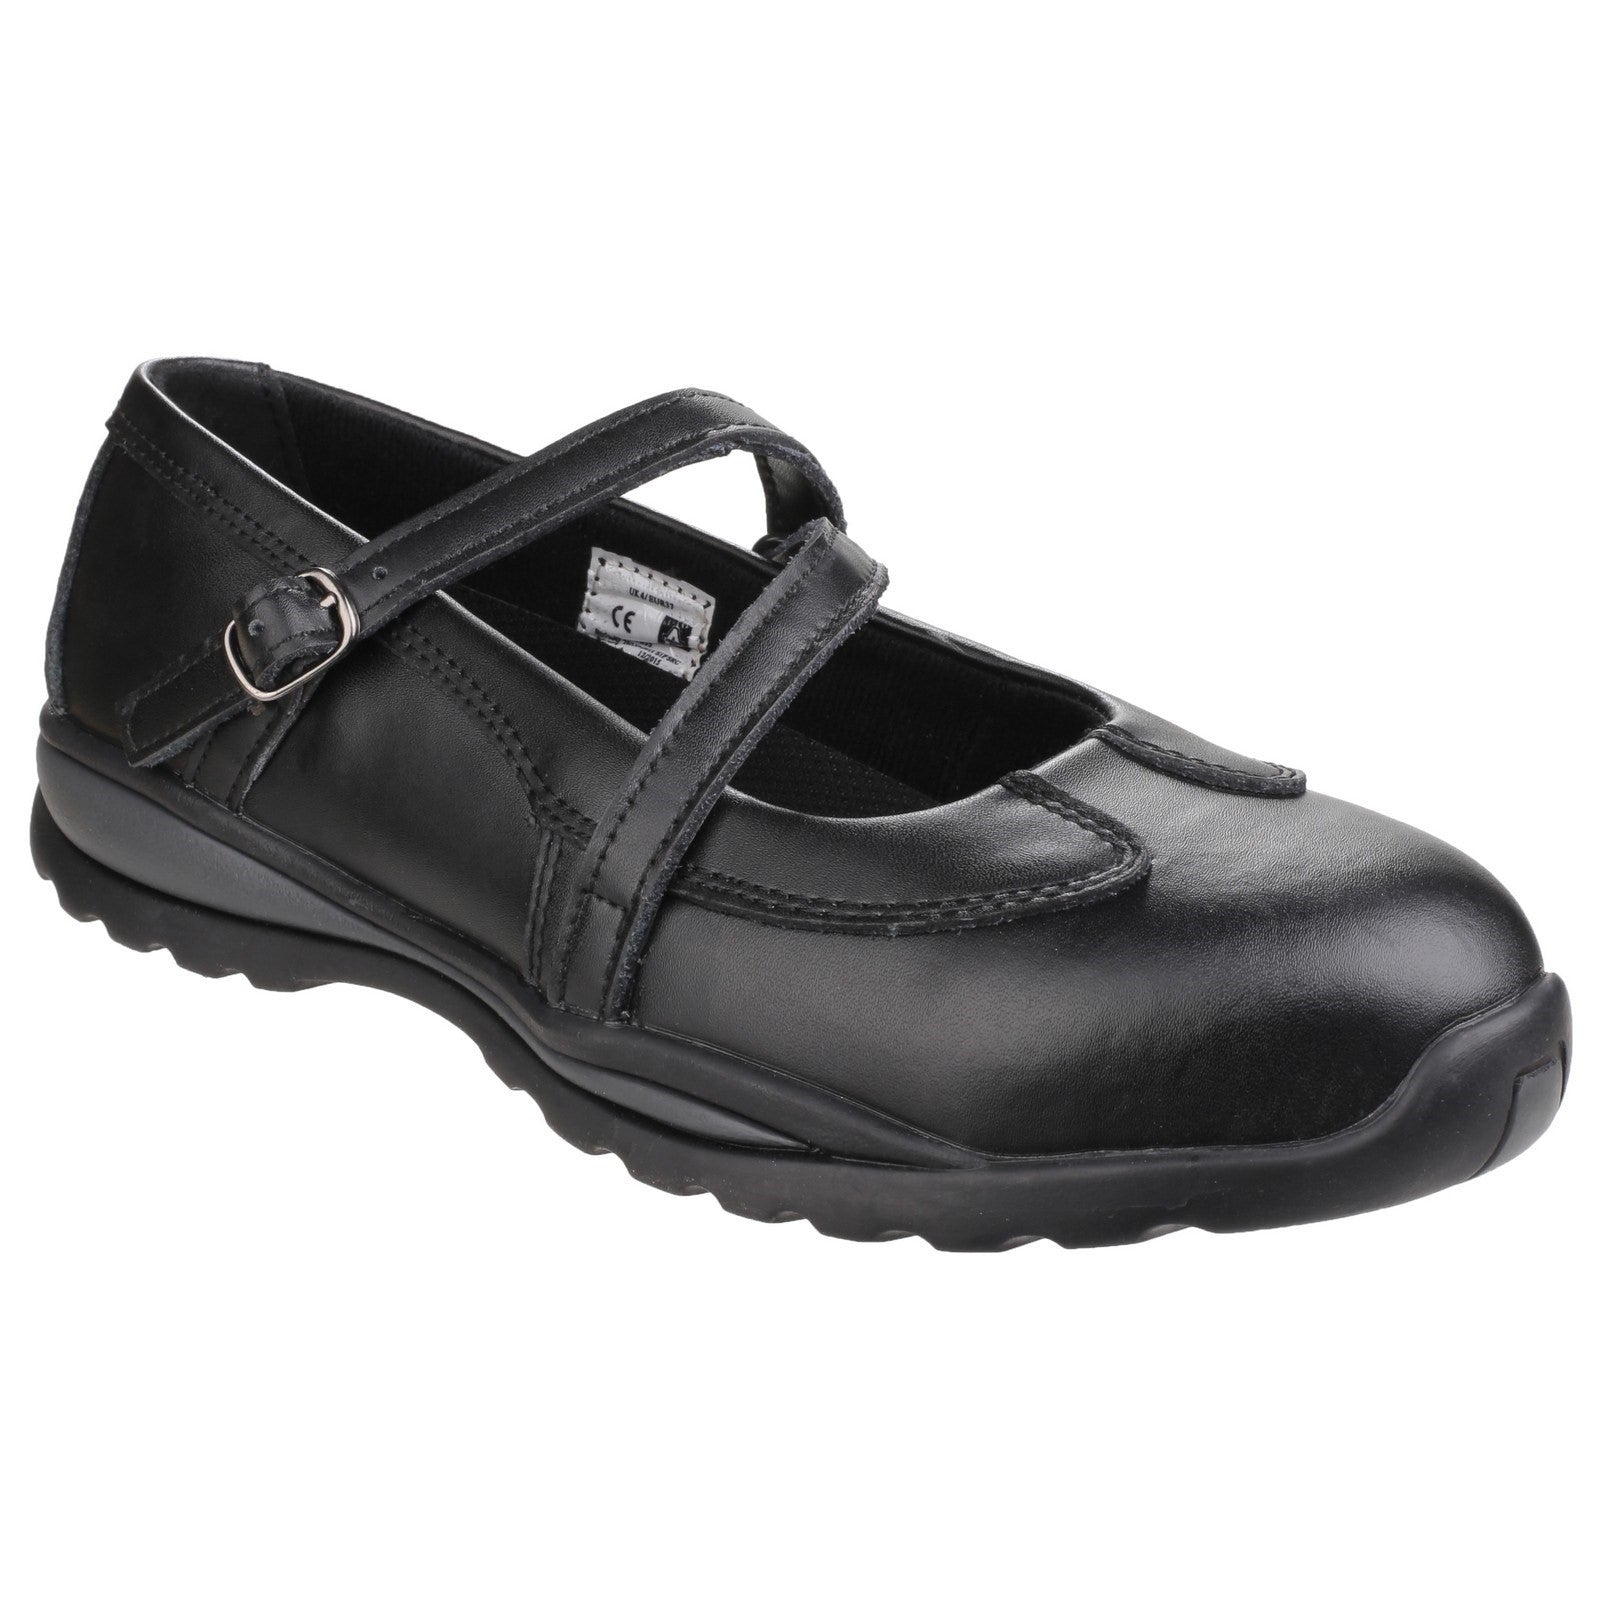 FS55 Women's Safety Shoe, Amblers Safety